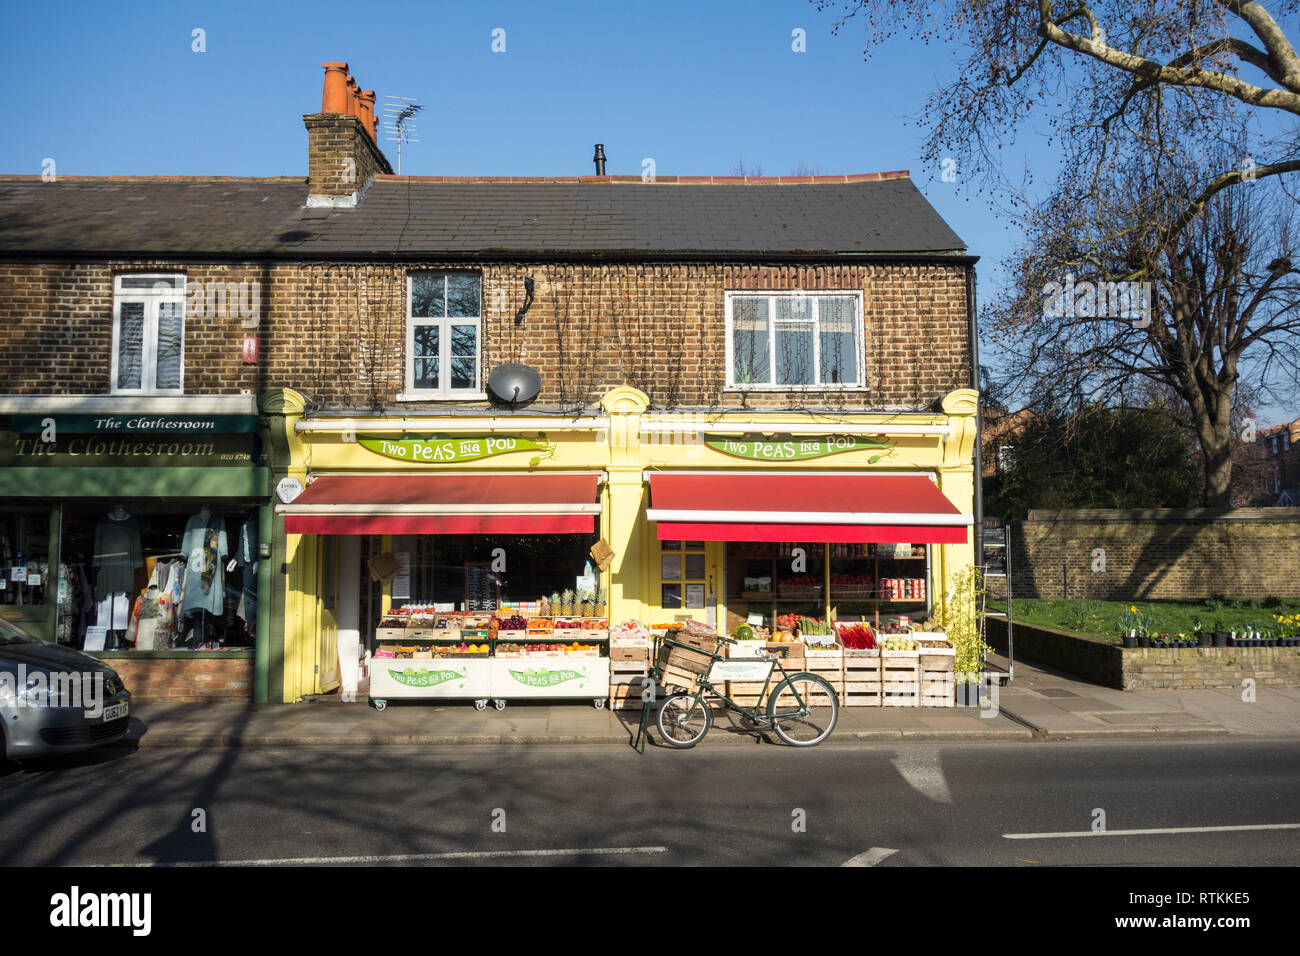 Two Peas In a Pod - sunlit greengrocers corner shop in Barnes, southwest London, UK Stock Photo